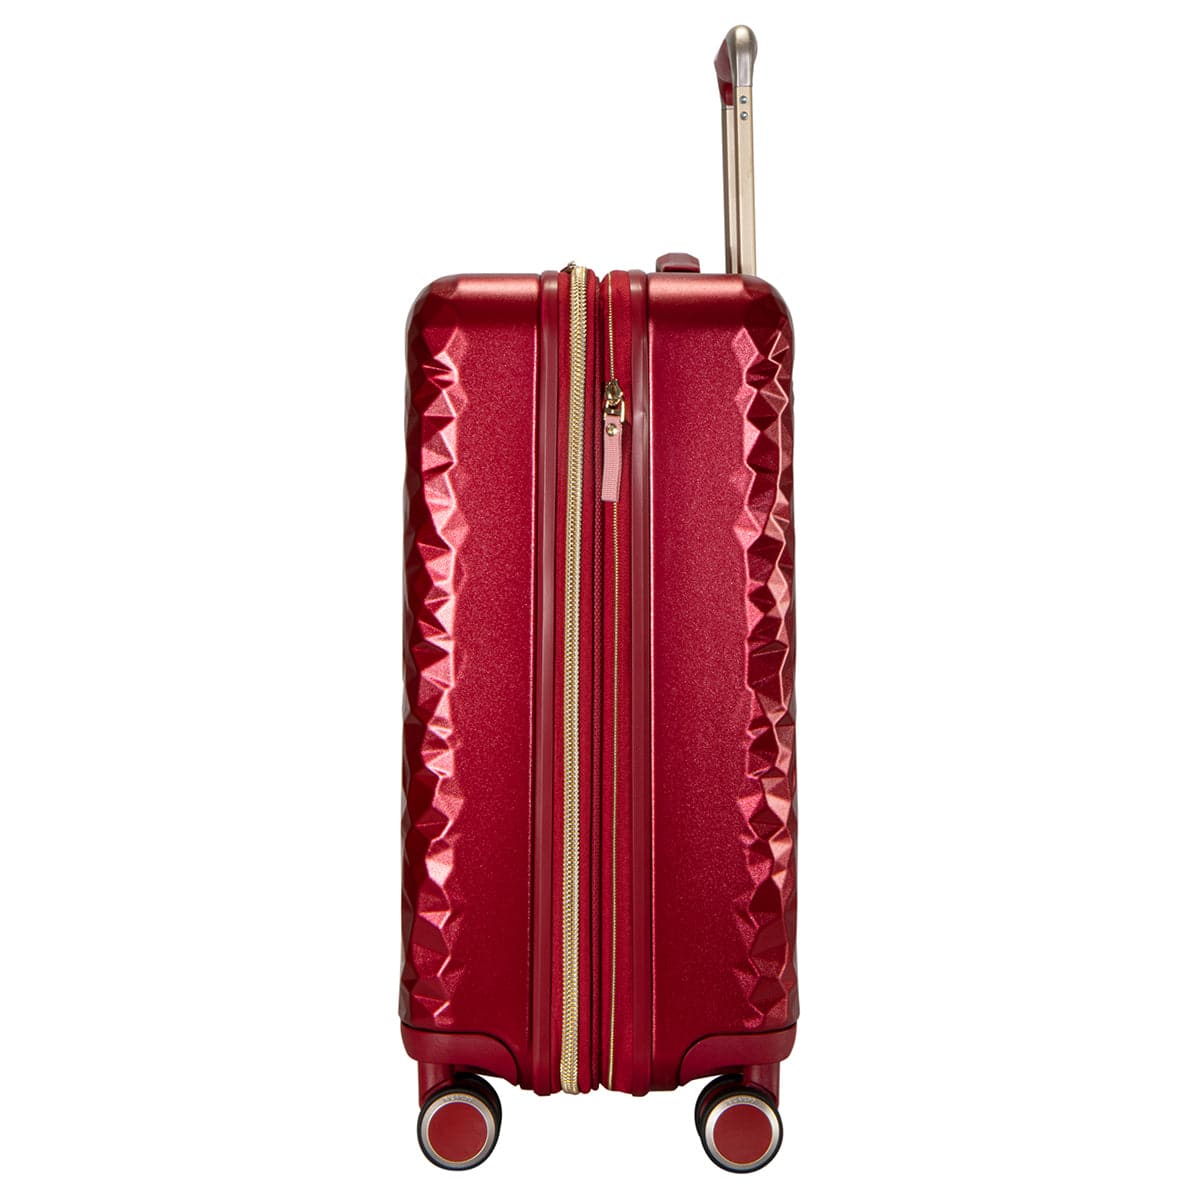 Ricardo Beverly Hills Indio Carry-On Suitcase Luggage